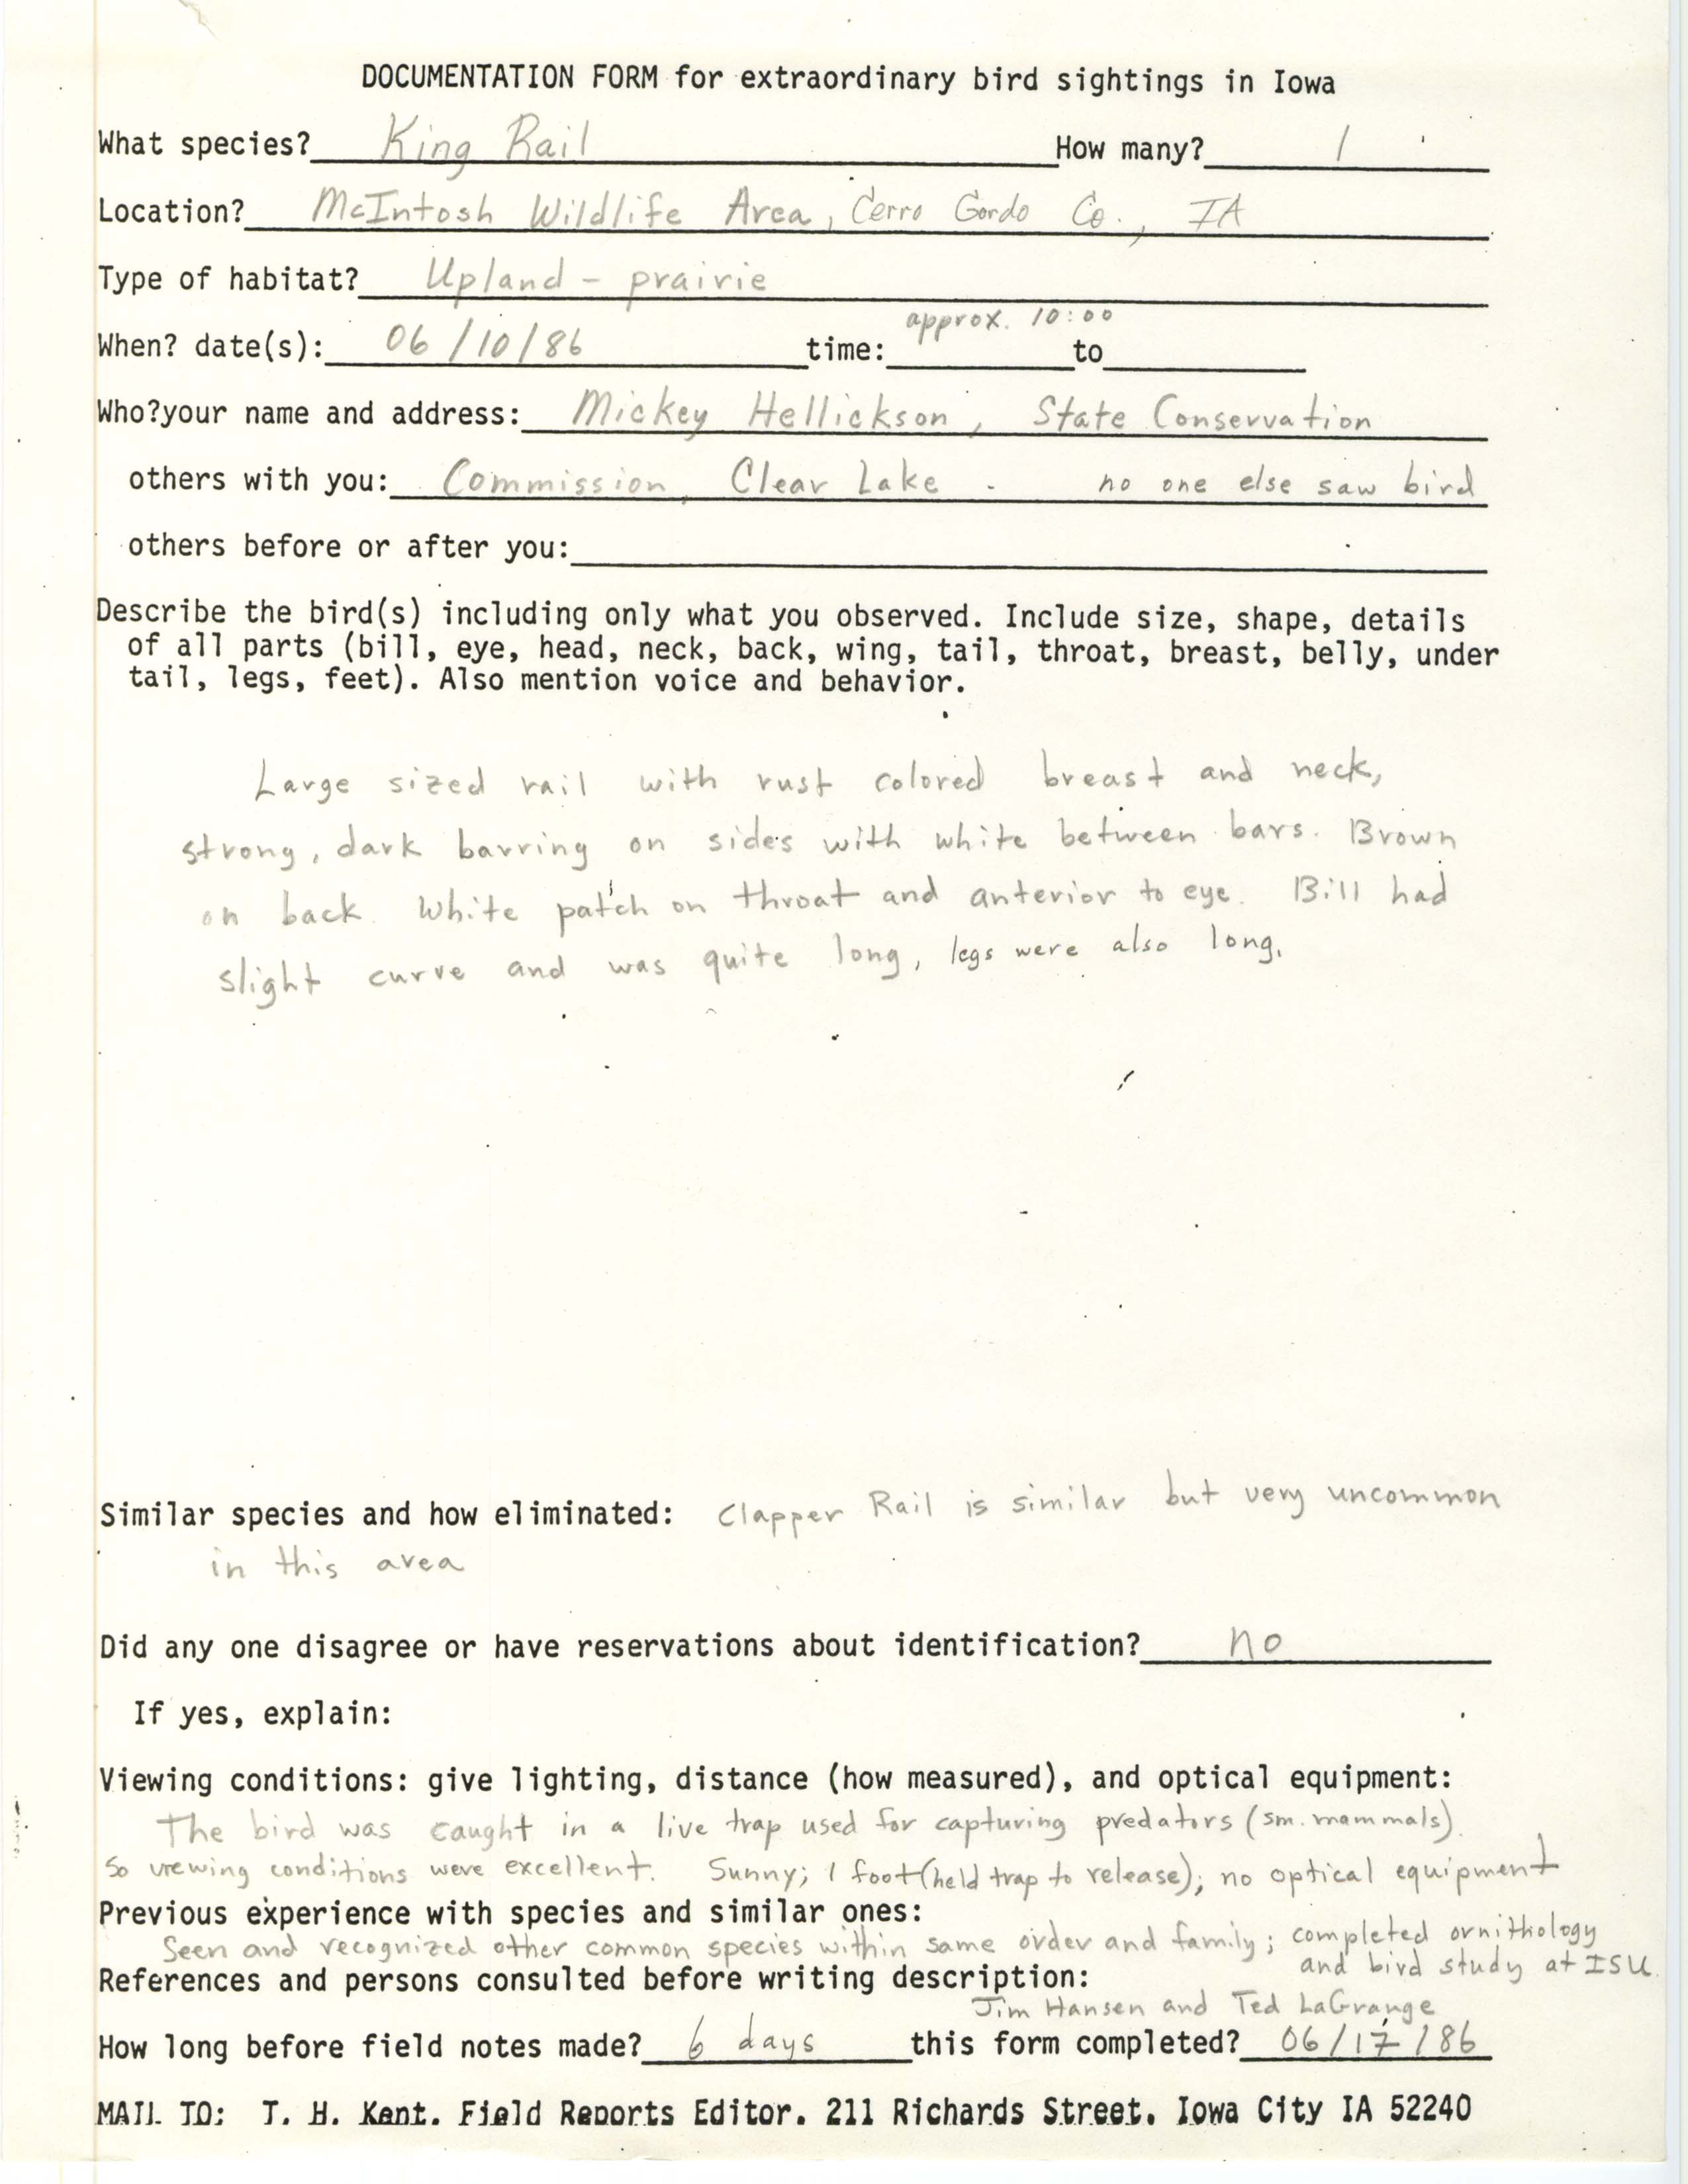 Rare bird documentation form for King Rail at McIntosh Wildlife Area, 1986